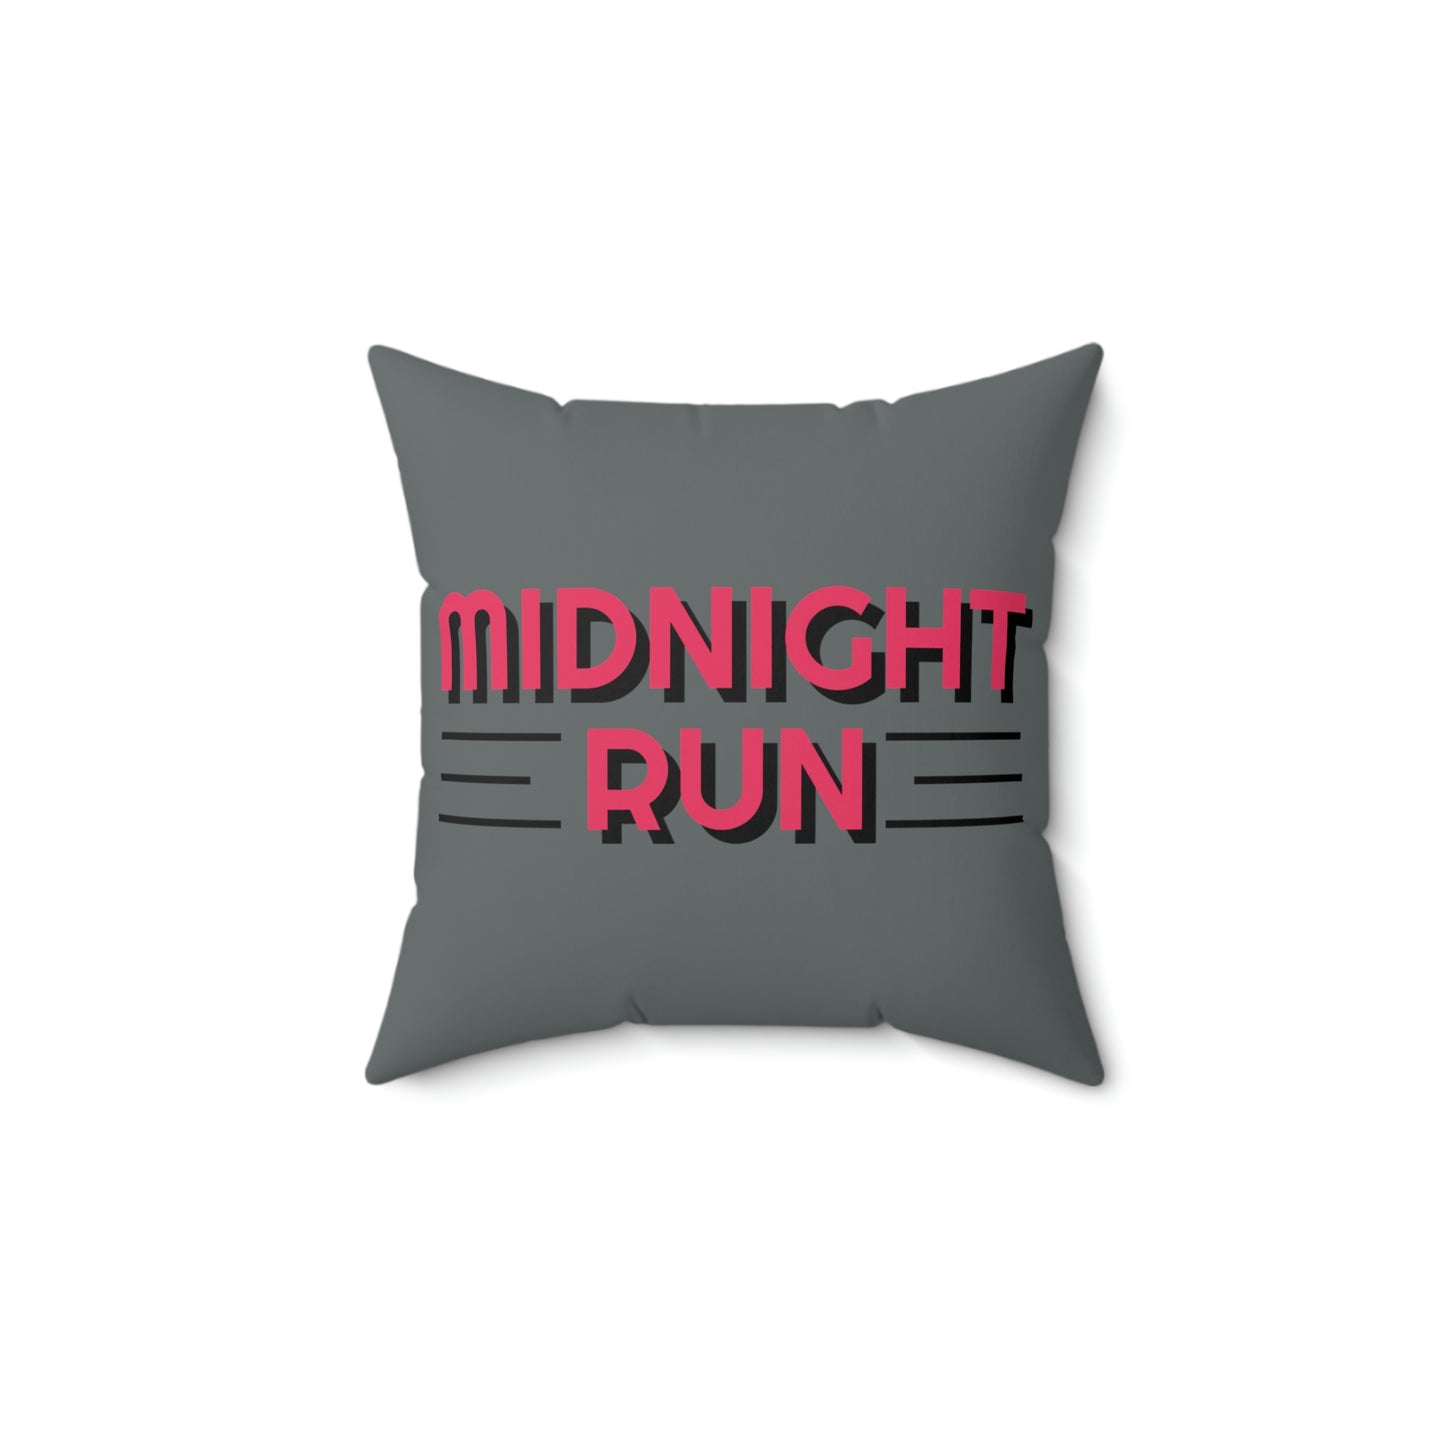 Spun Polyester Square Pillow Case "Midnight Run on Dark Gray”